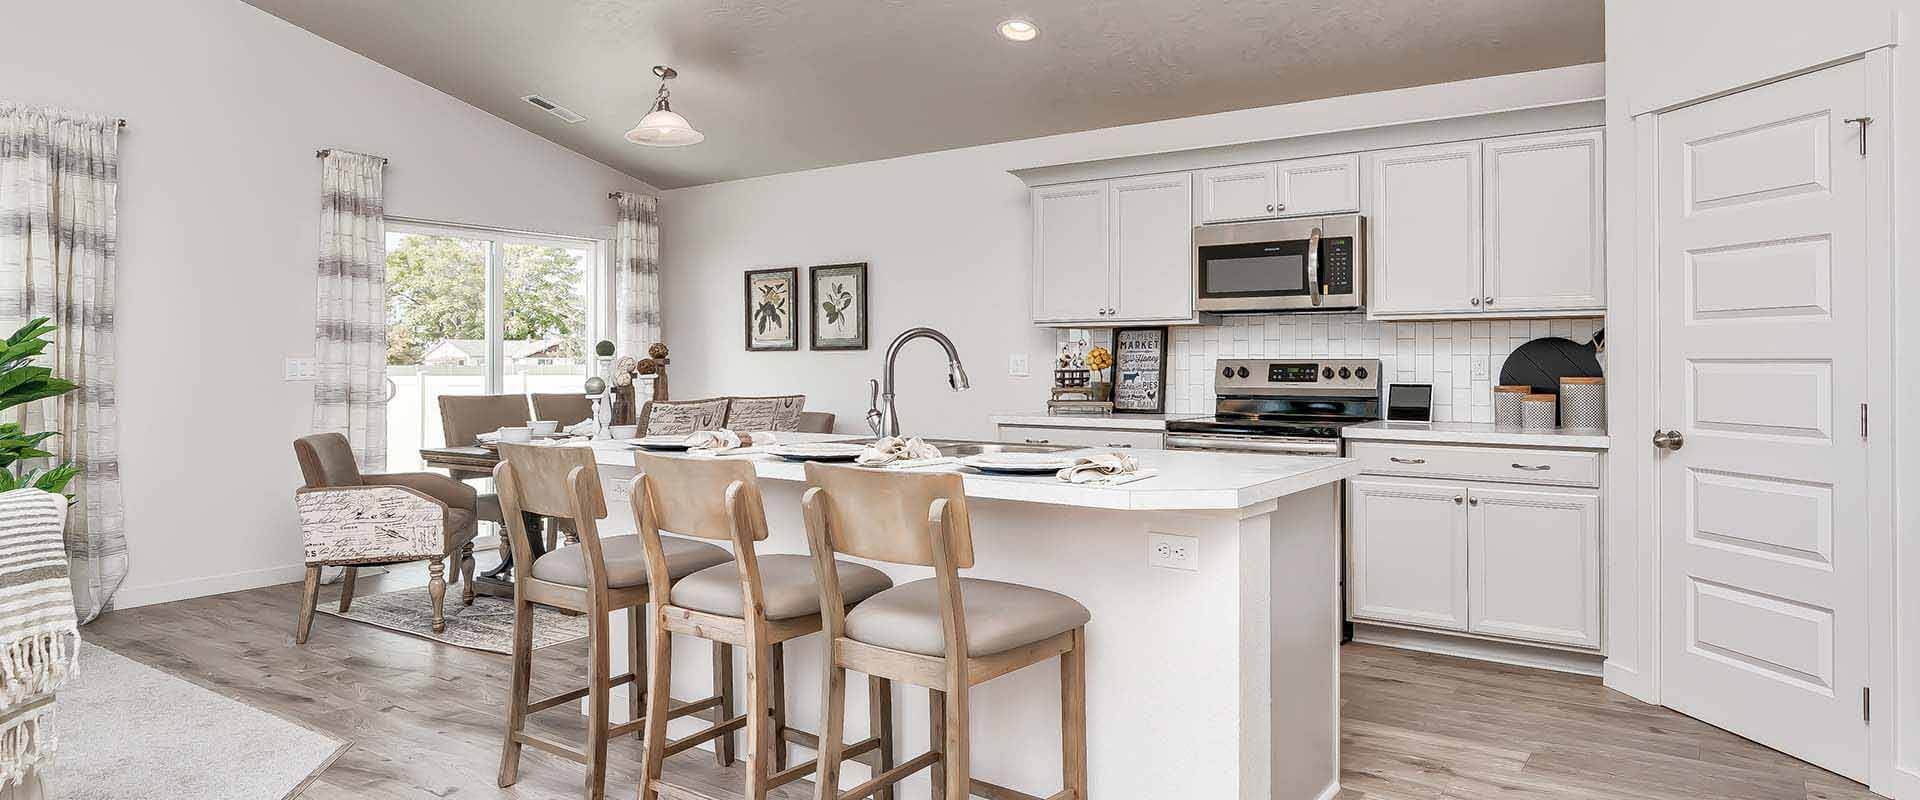 Brookfield-new-homes-boise-idaho-hubble-homes-kitchen-04.jpg